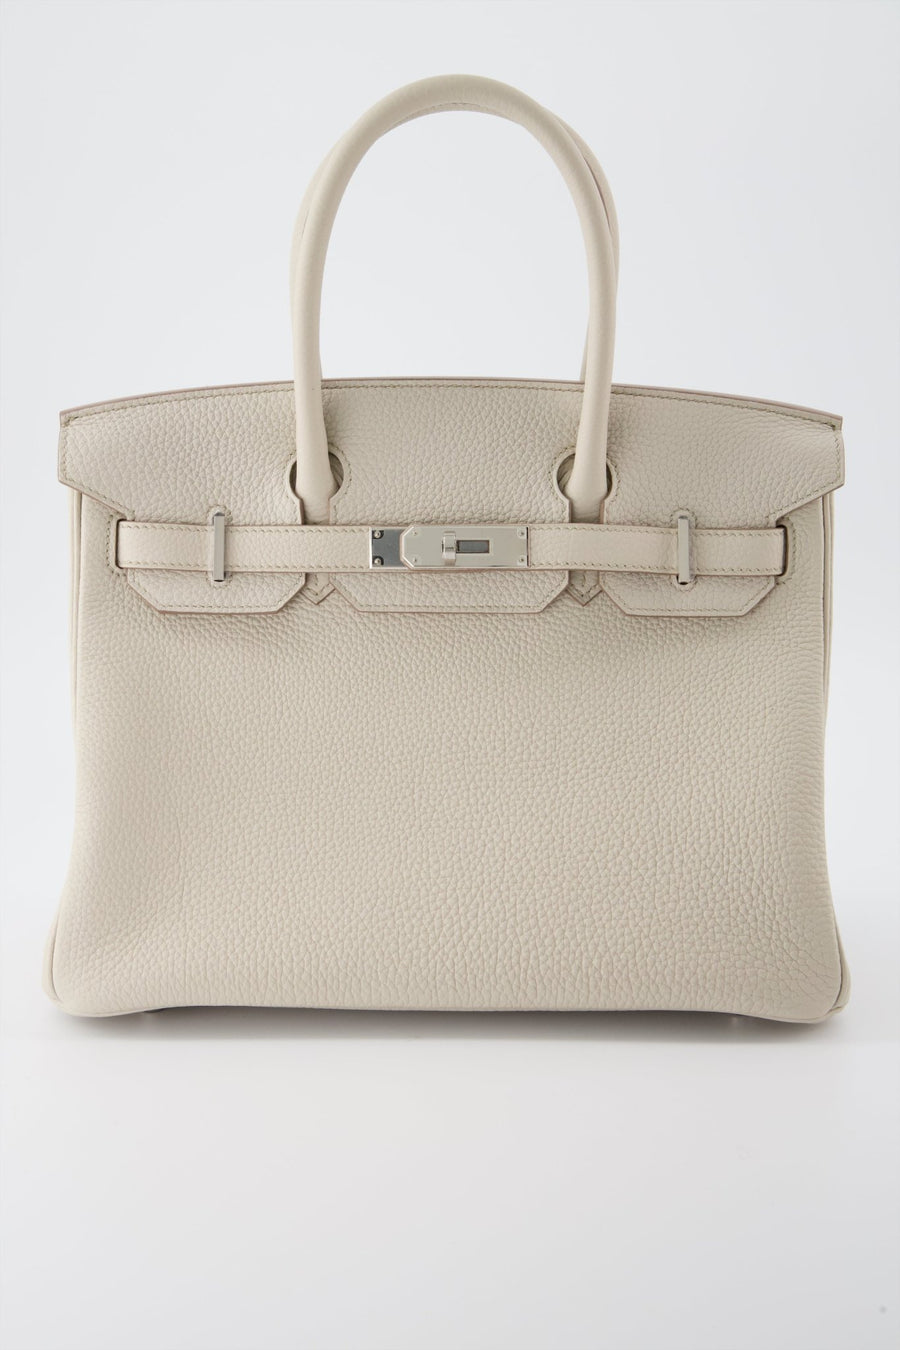 Hermès - Hermès Birkin 30 Togo Leather Handbag-Vert Fonce Silver Hardware